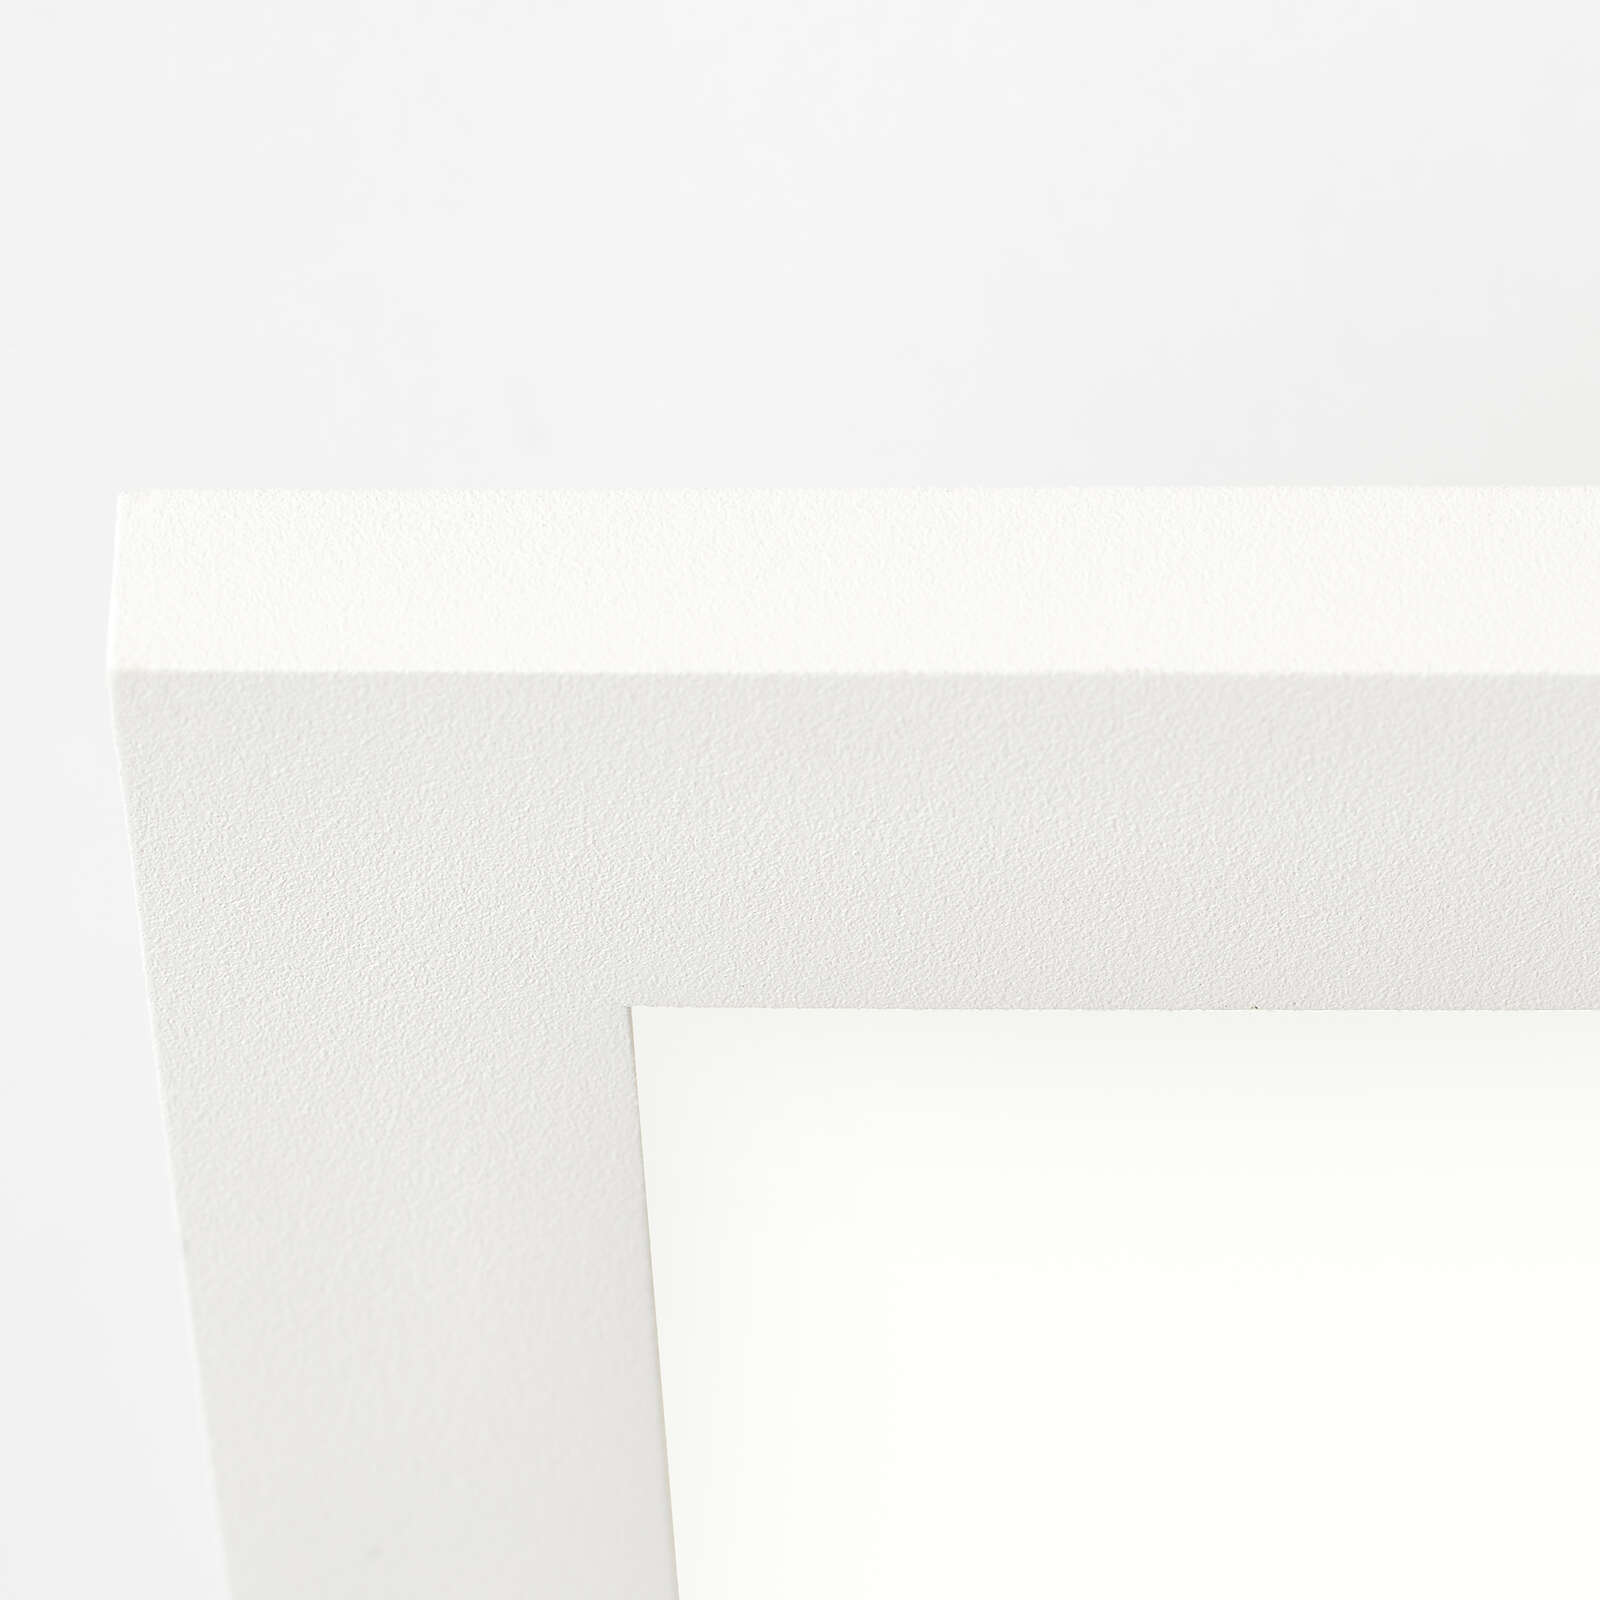             Metal surface-mounted panel - Constantin 16 - White
        